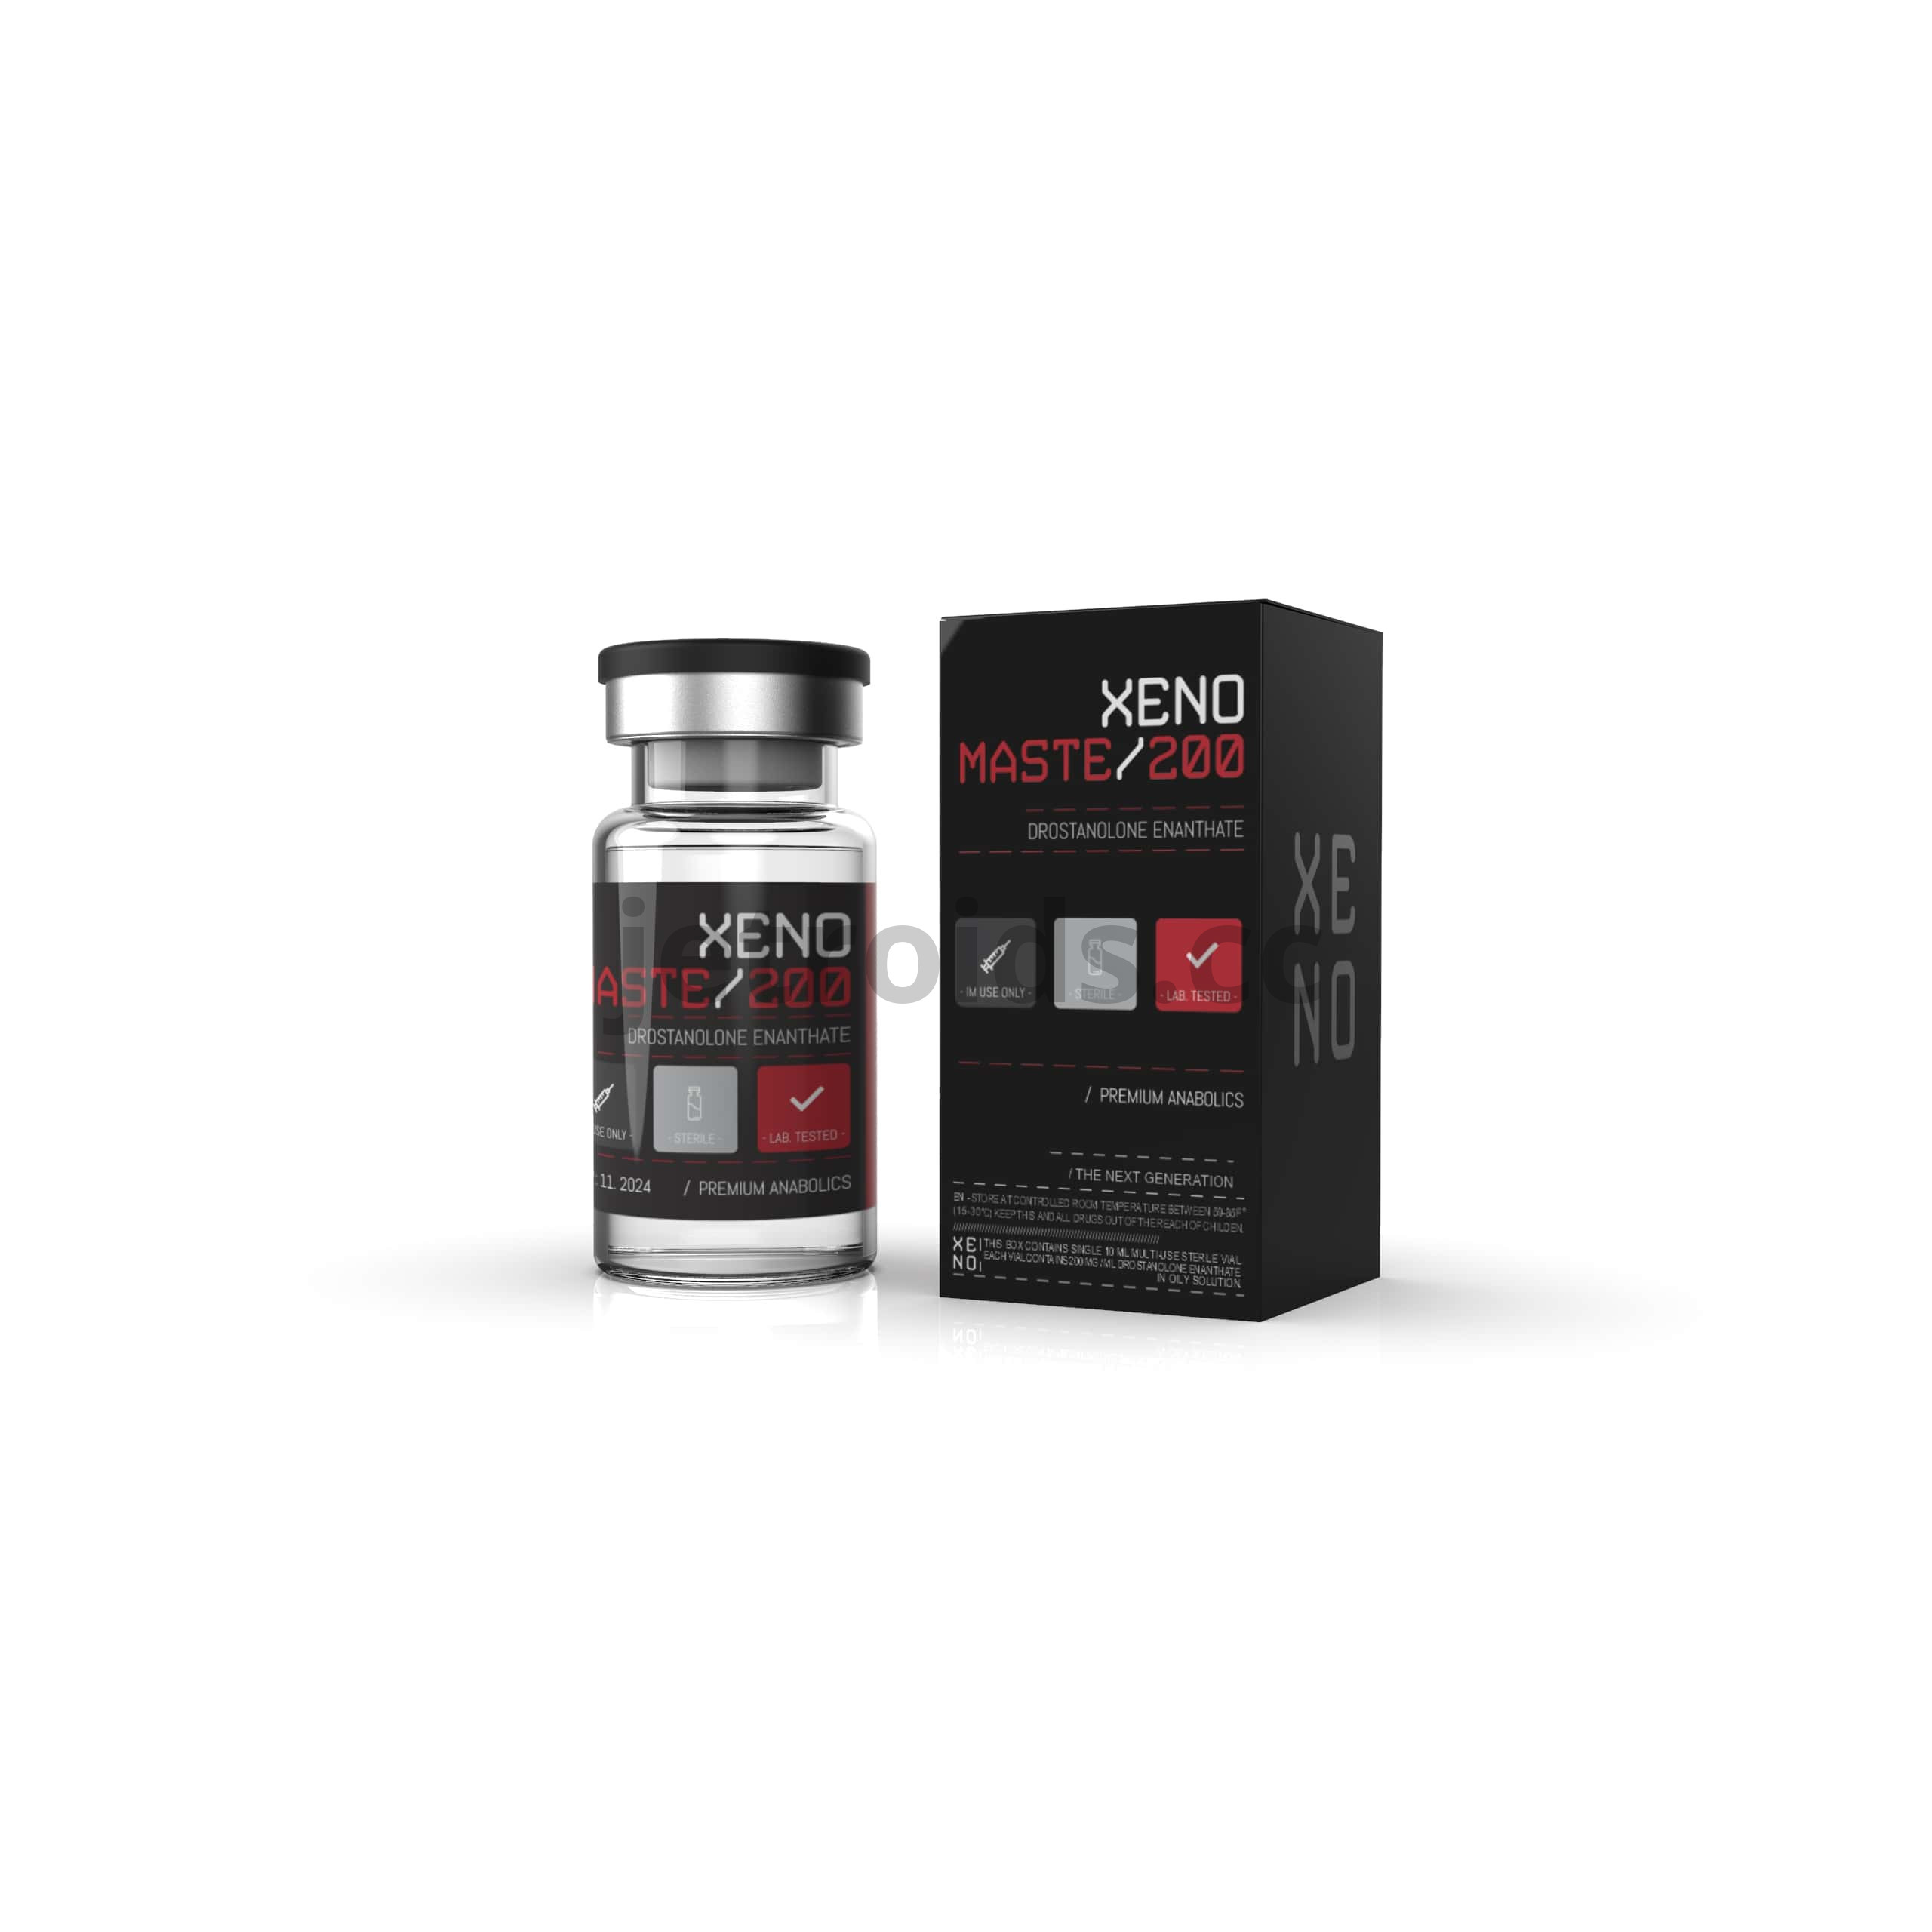 Xeno Labs Masteron E 200 Product Info